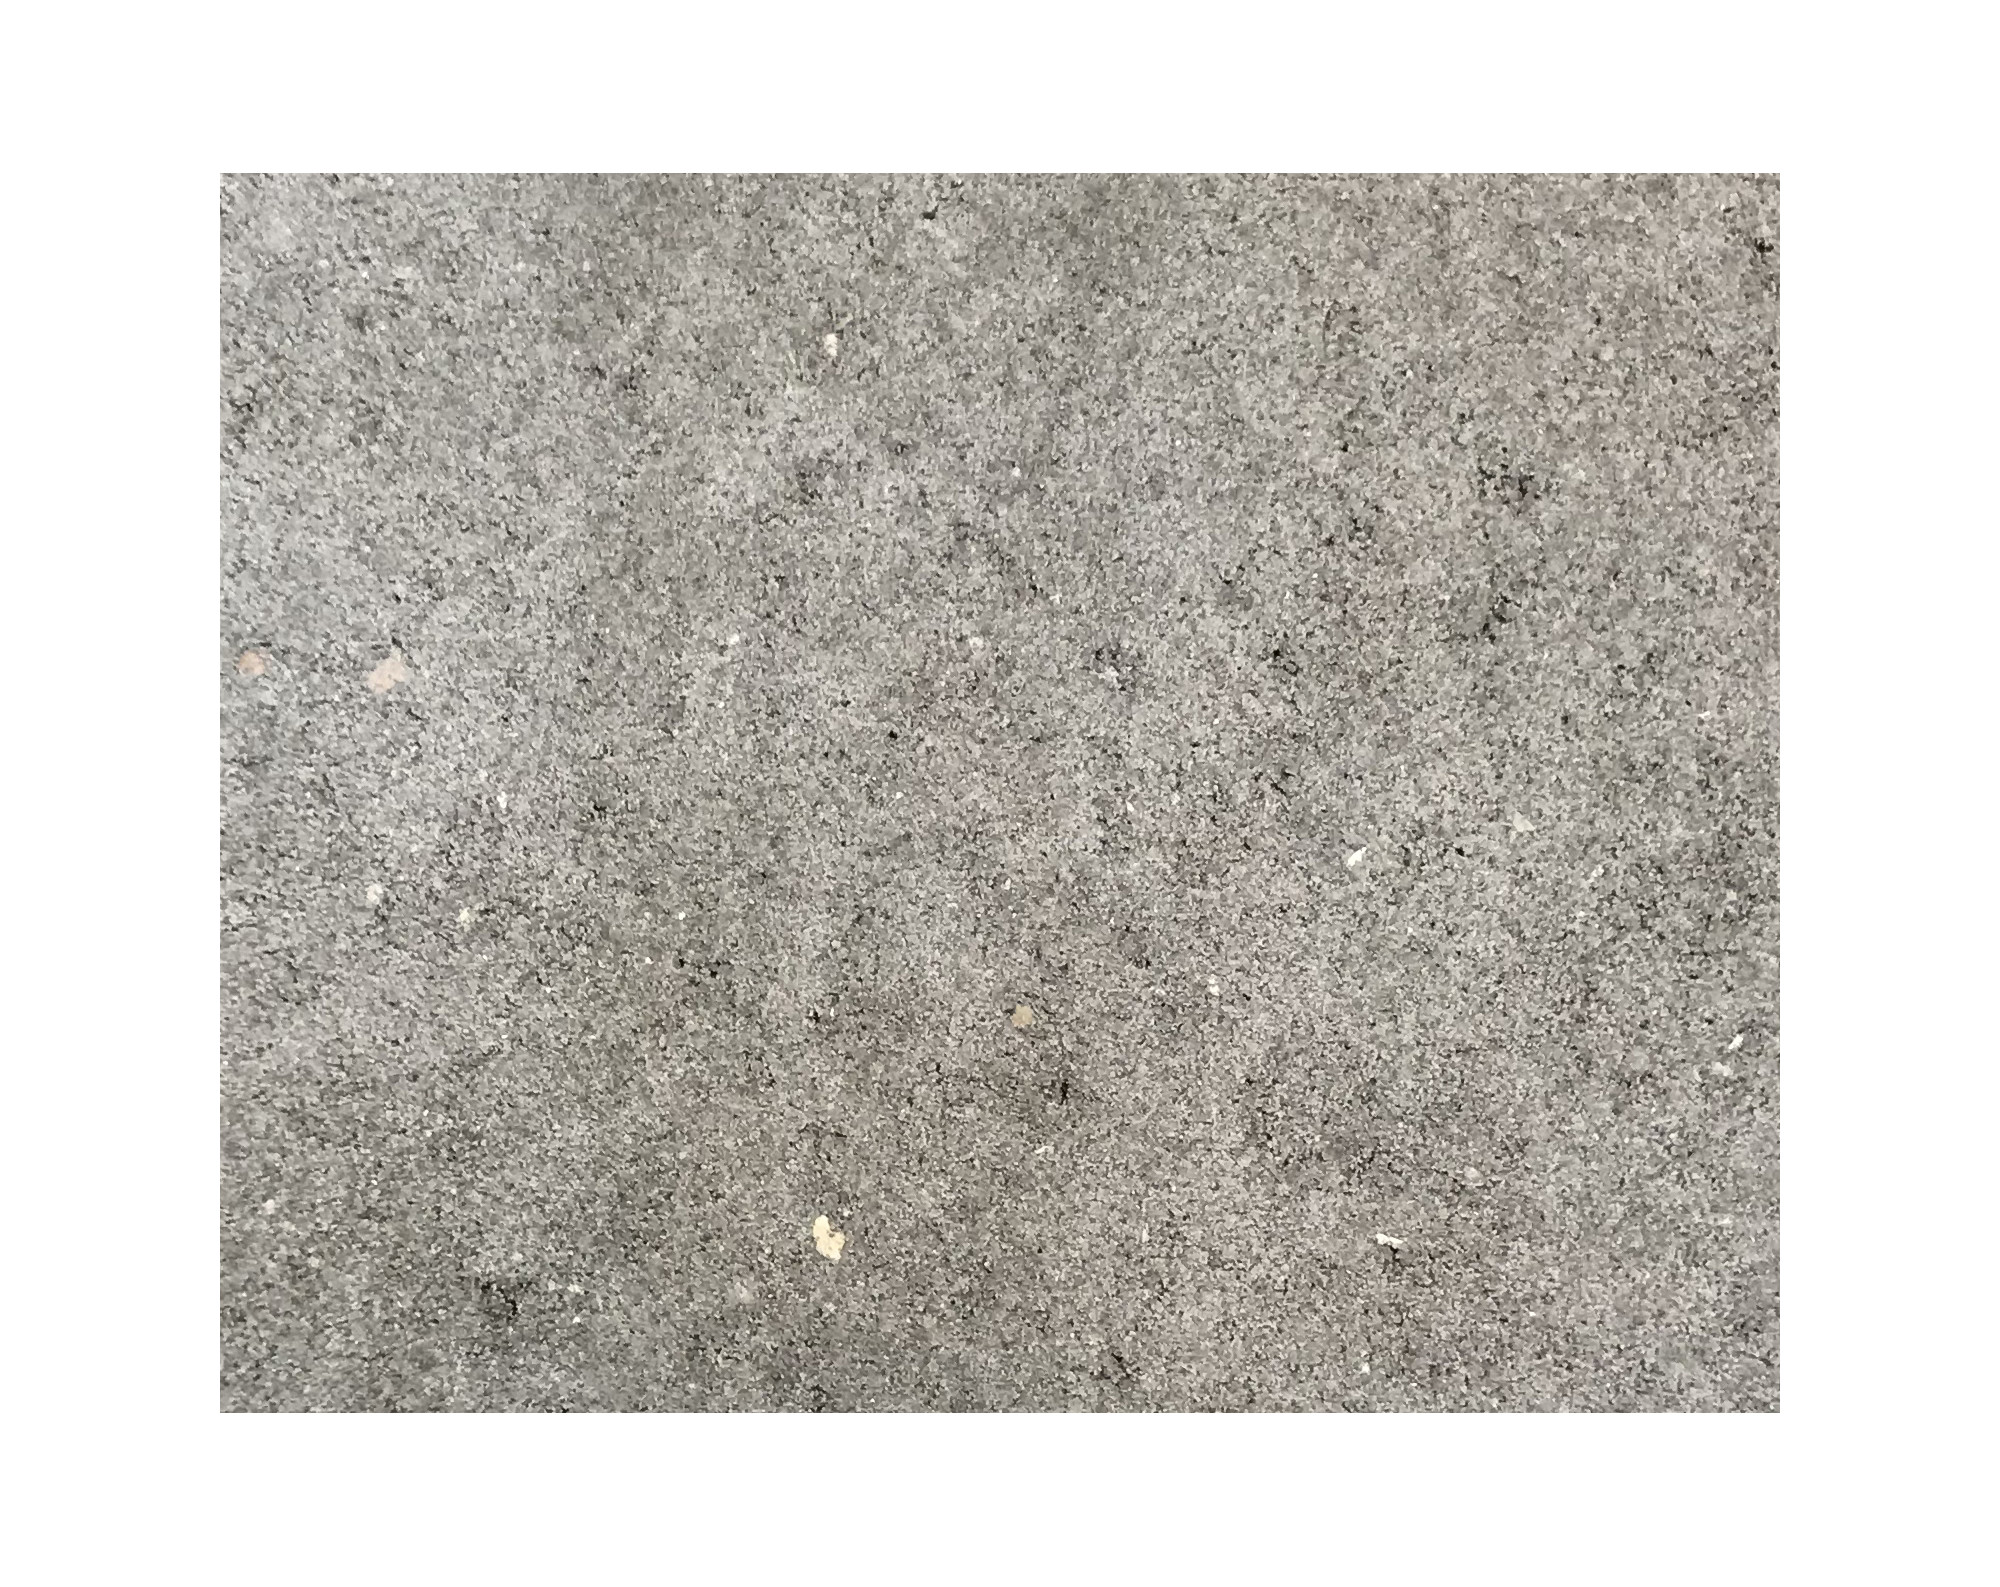 Harmo roc nevadaset, rustica-serie, ovaal d: 4,20mx8,20m, grijs, beton